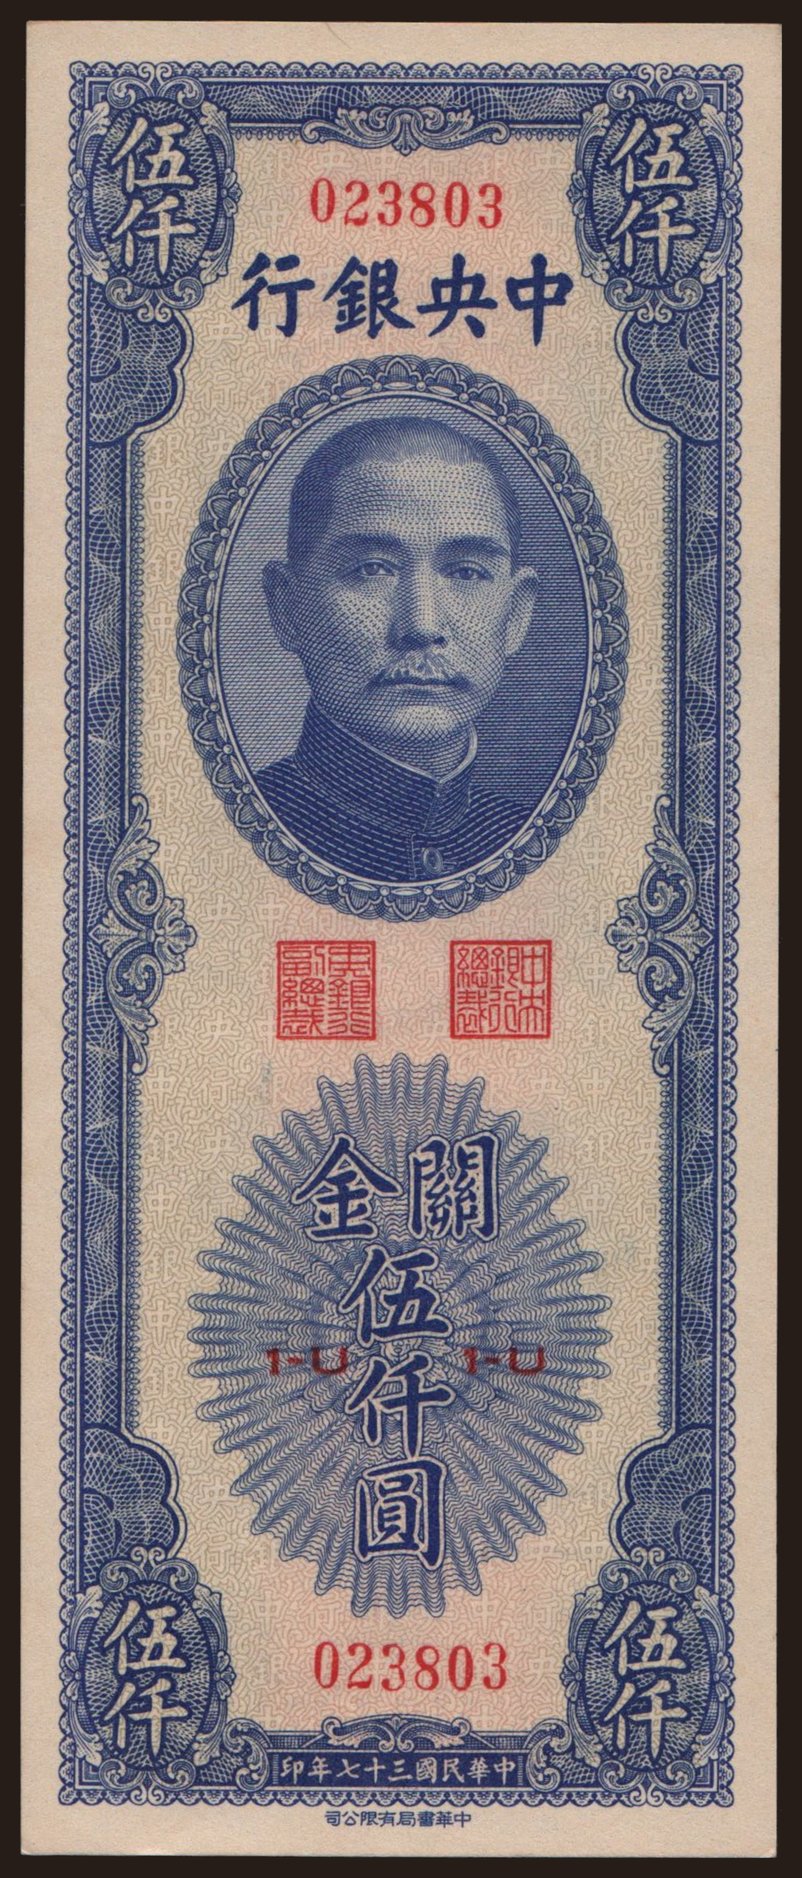 Central Bank of China, 5000 gold units, 1948